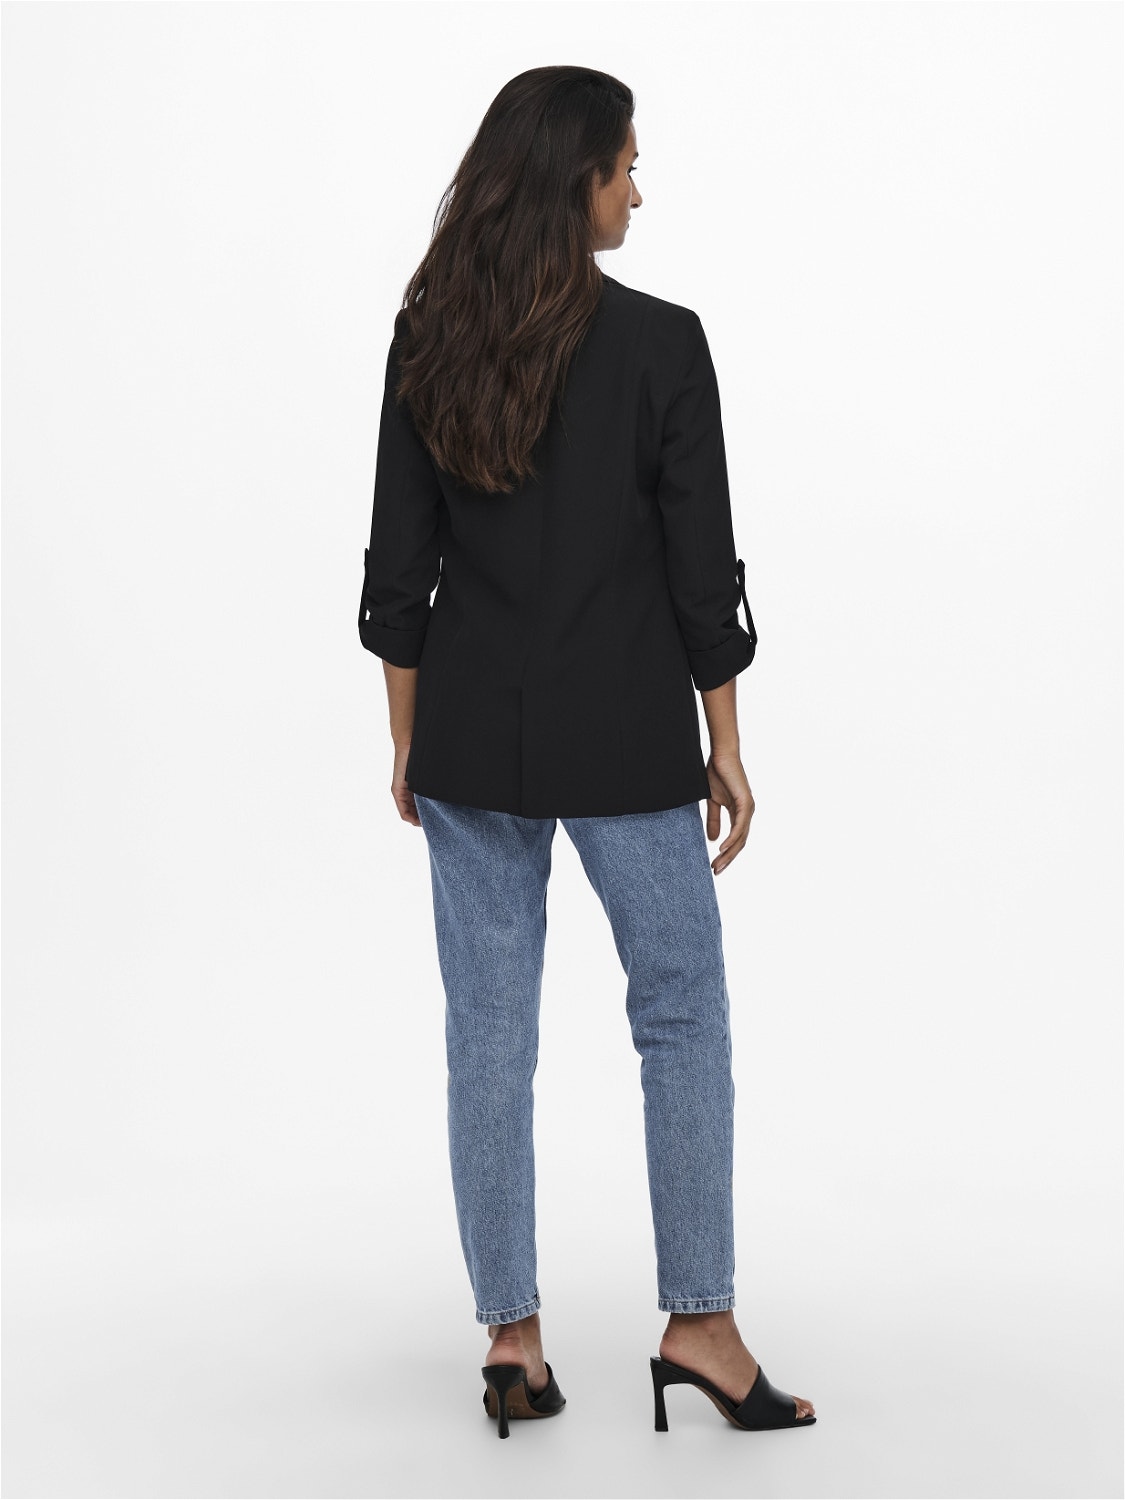 Long 3/4 sleeved | | Black ONLY® blazer